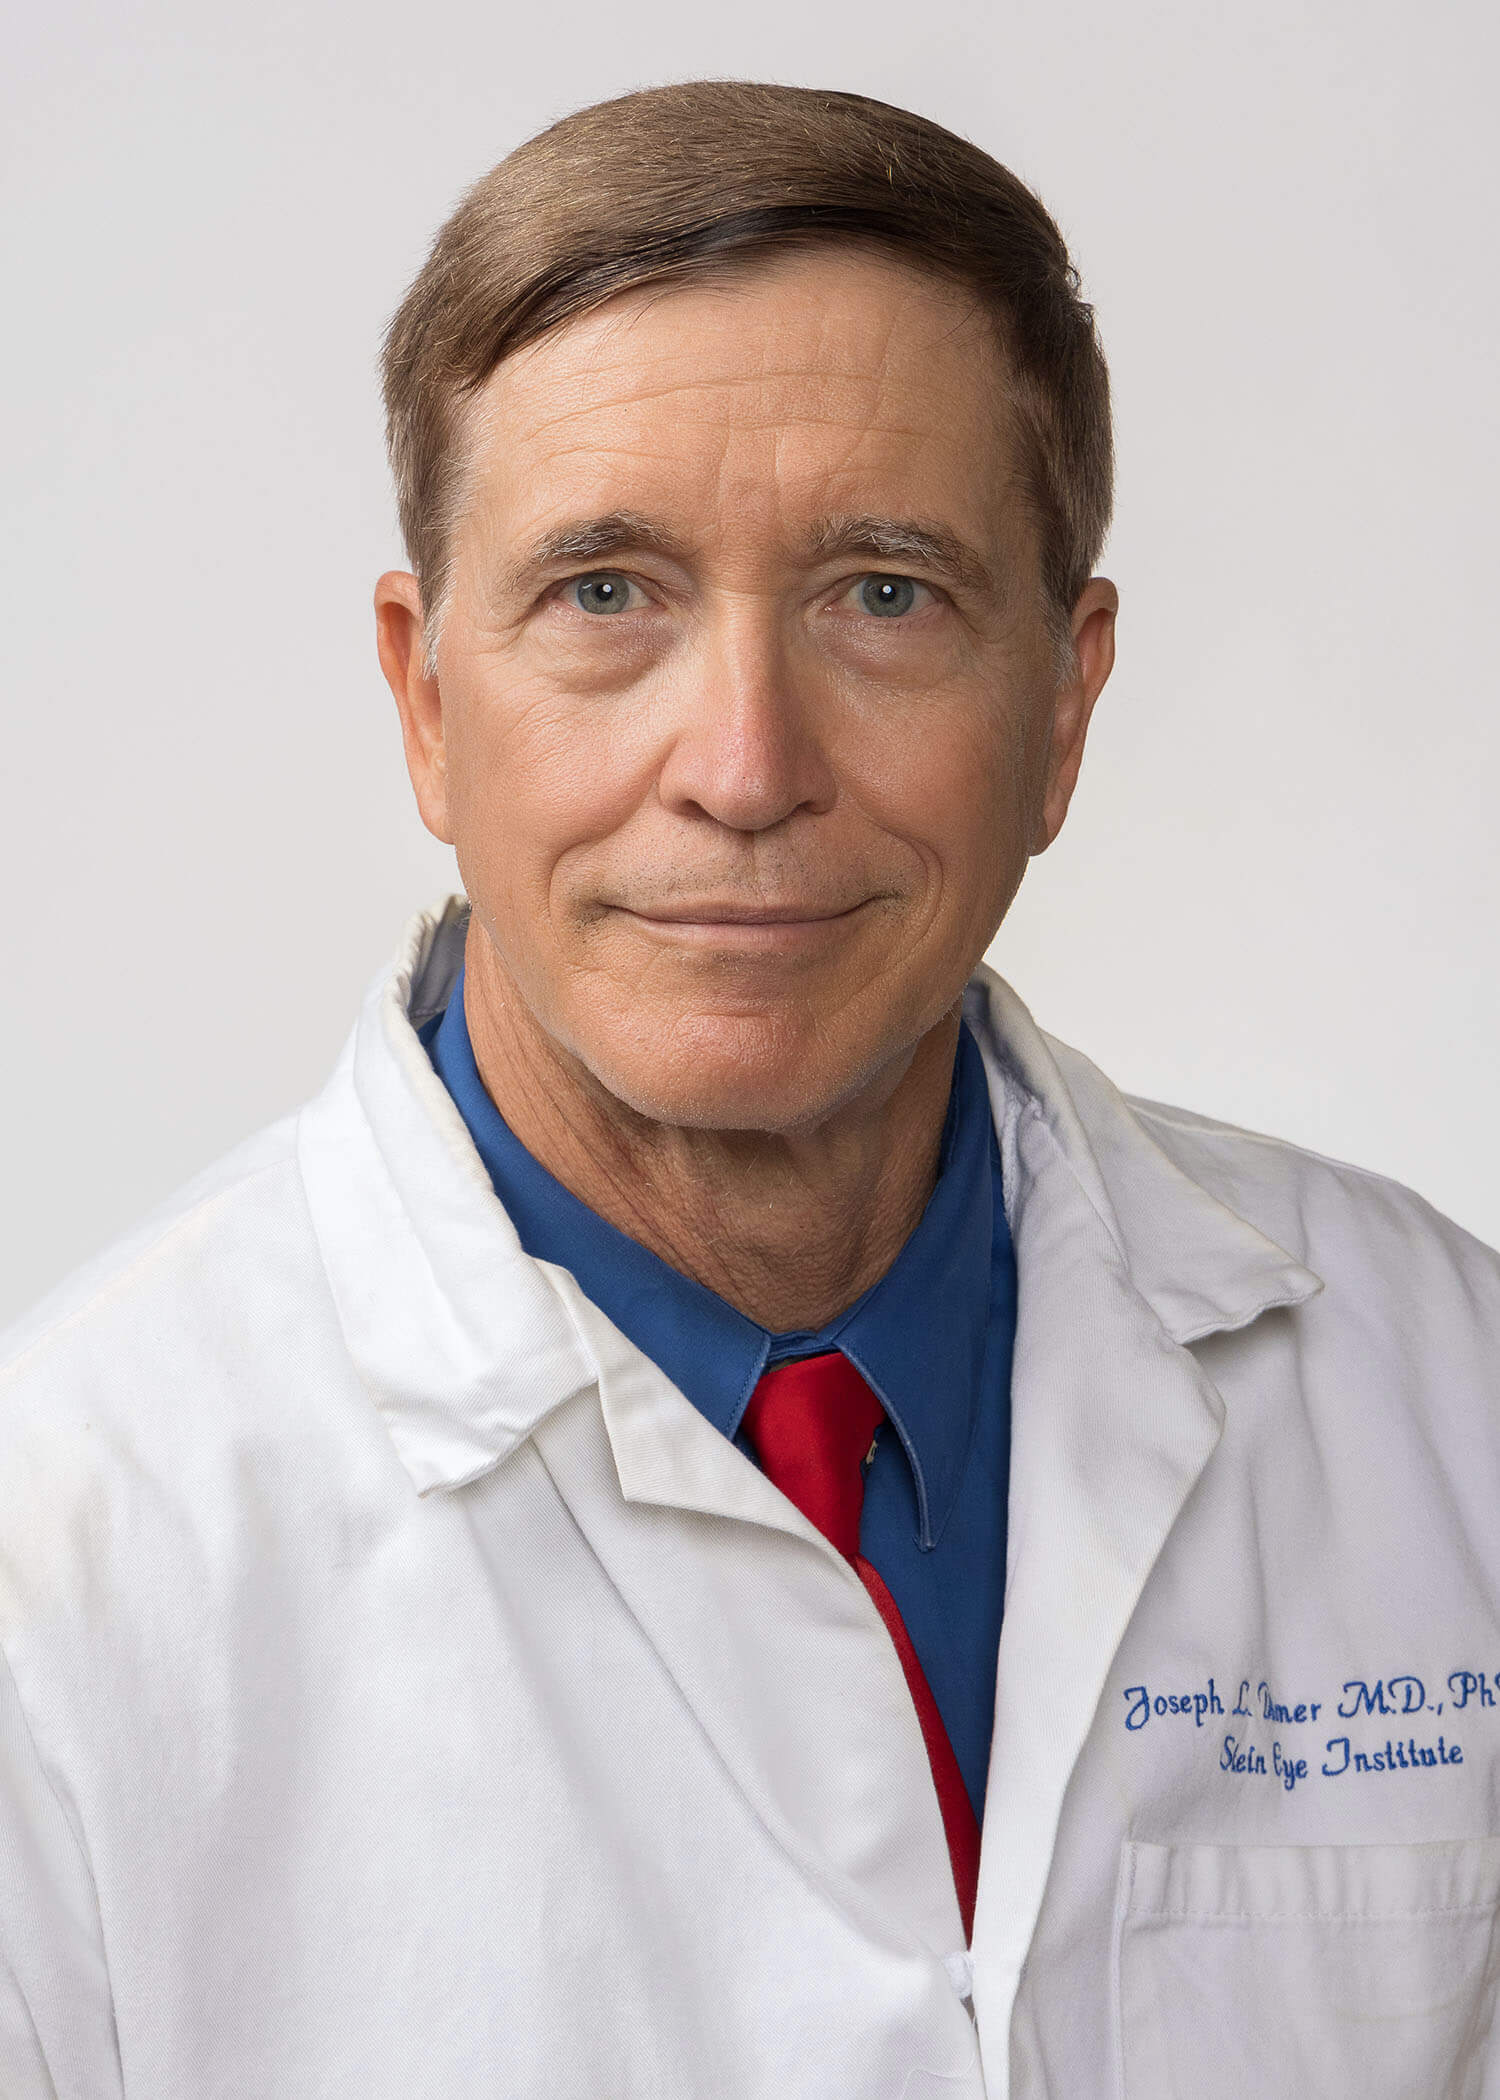 Joseph Demer, MD, PhD